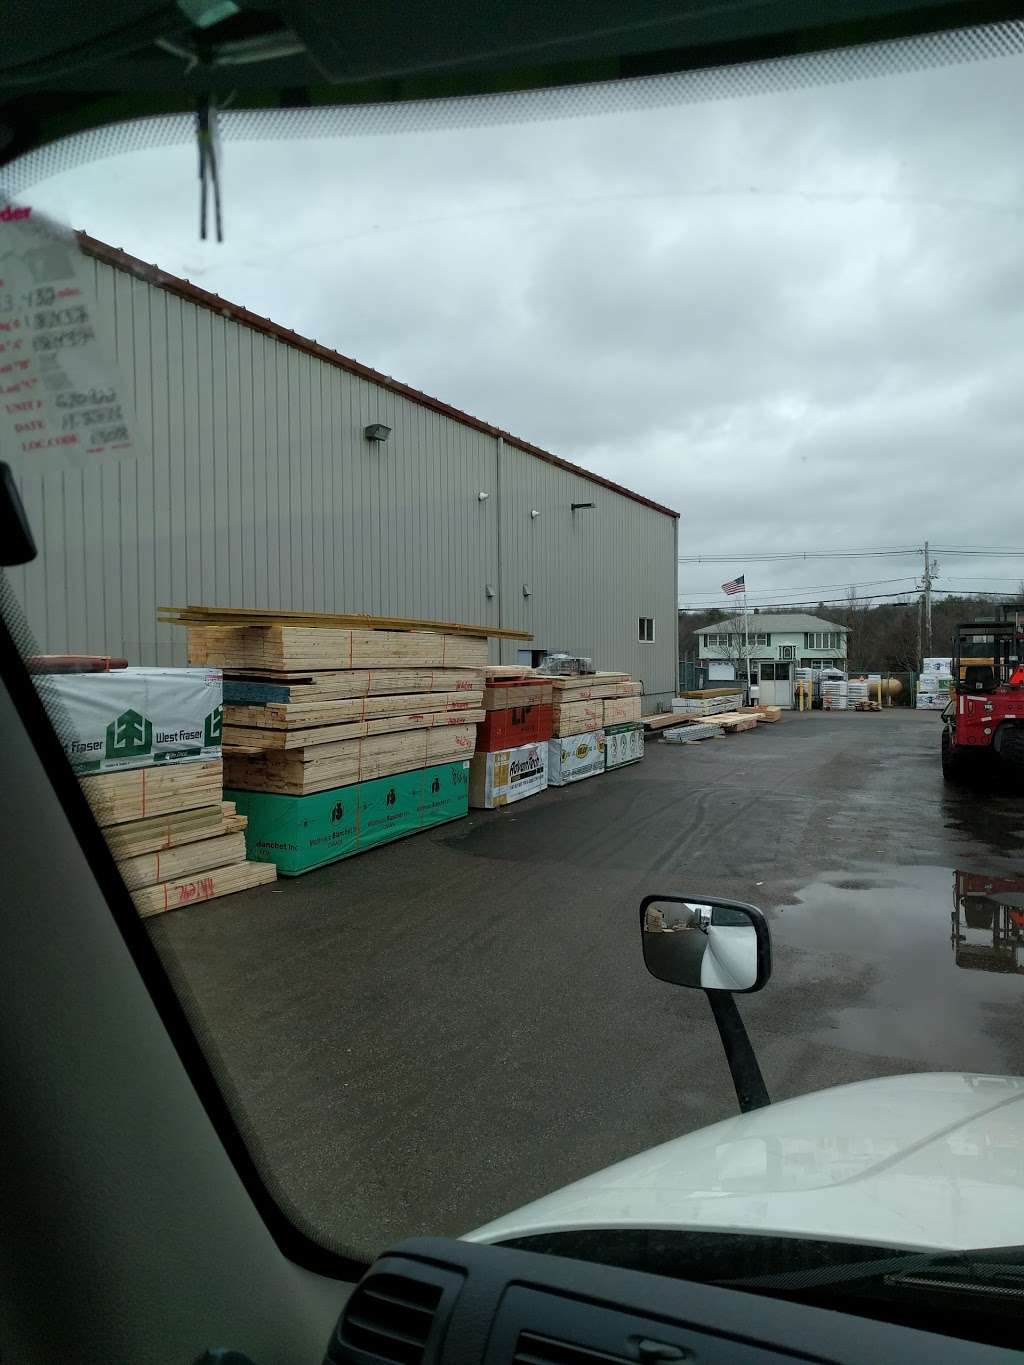 Mozzone Lumber Co Inc | 109 Winter St, Taunton, MA 02780 | Phone: (508) 822-7186